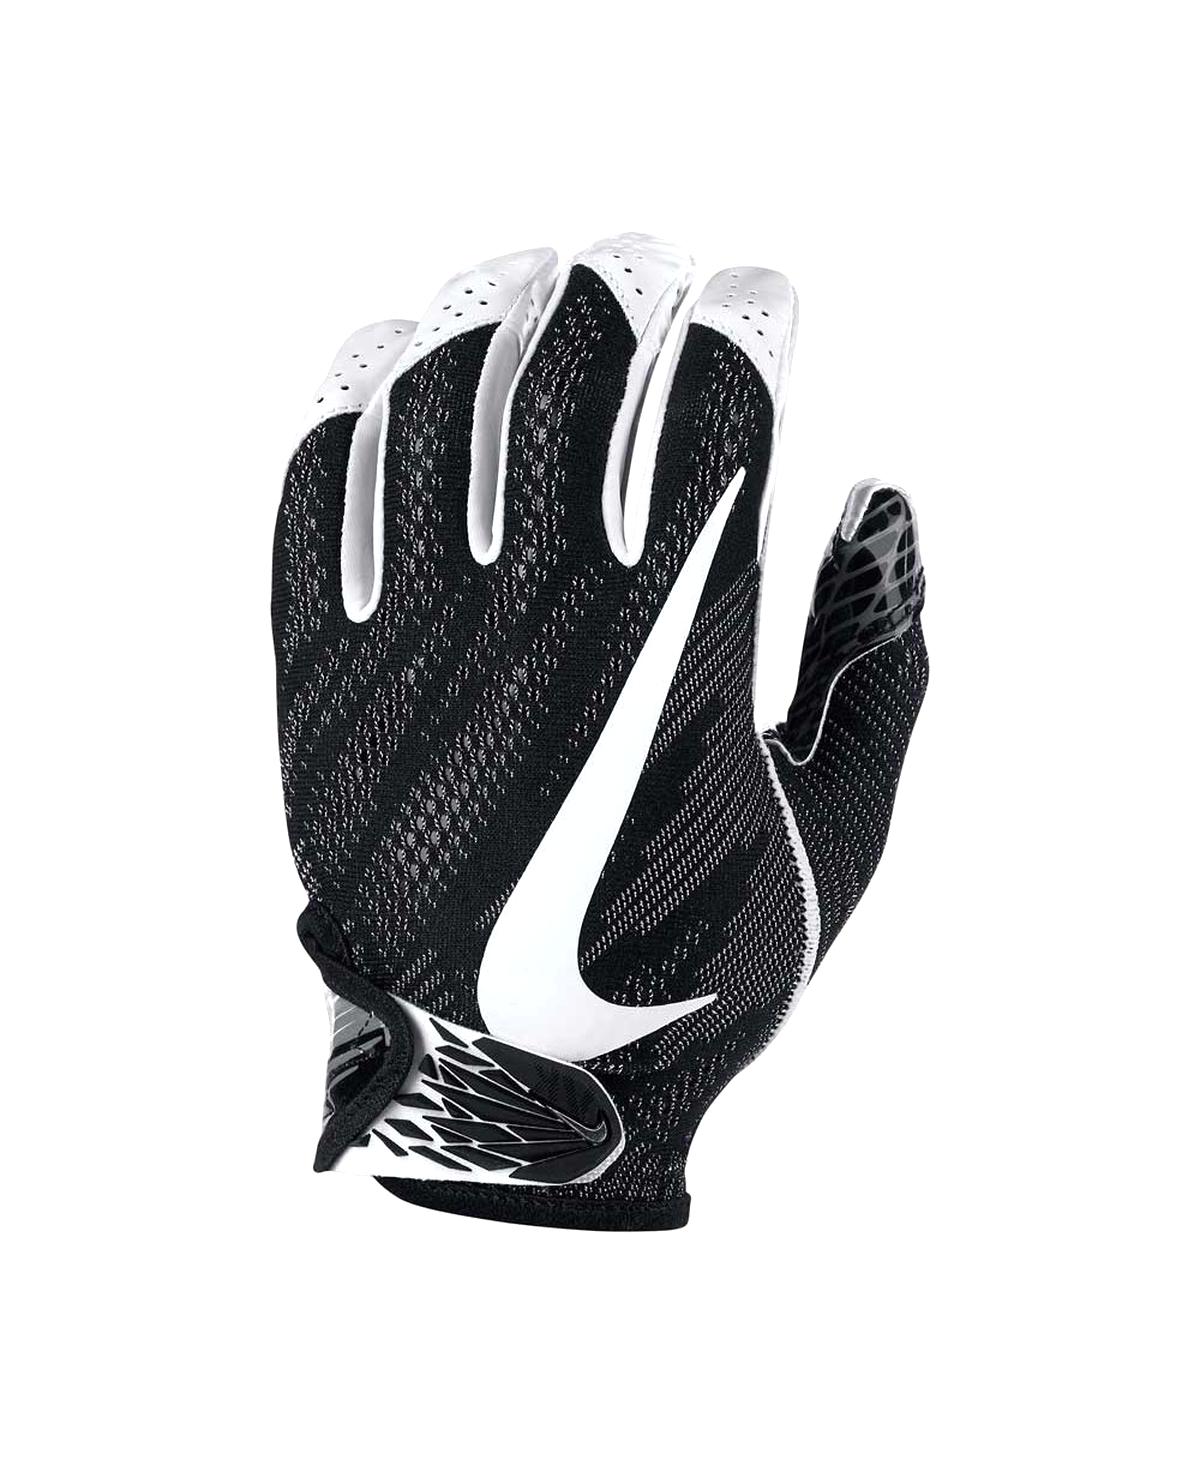 Nike American Football Gloves for sale in UK | 21 used Nike American